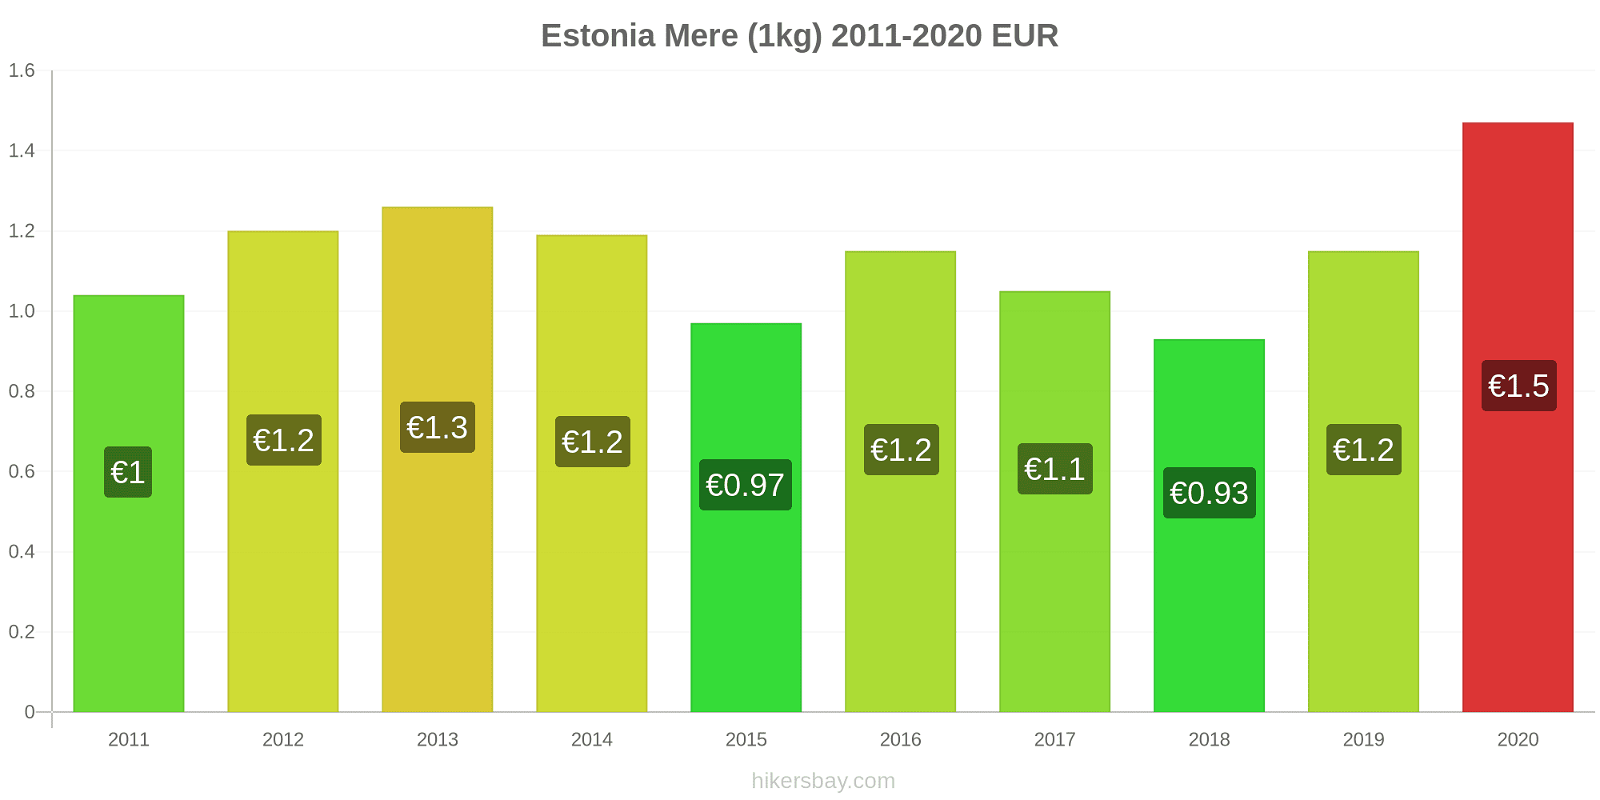 Estonia modificări de preț Mere (1kg) hikersbay.com